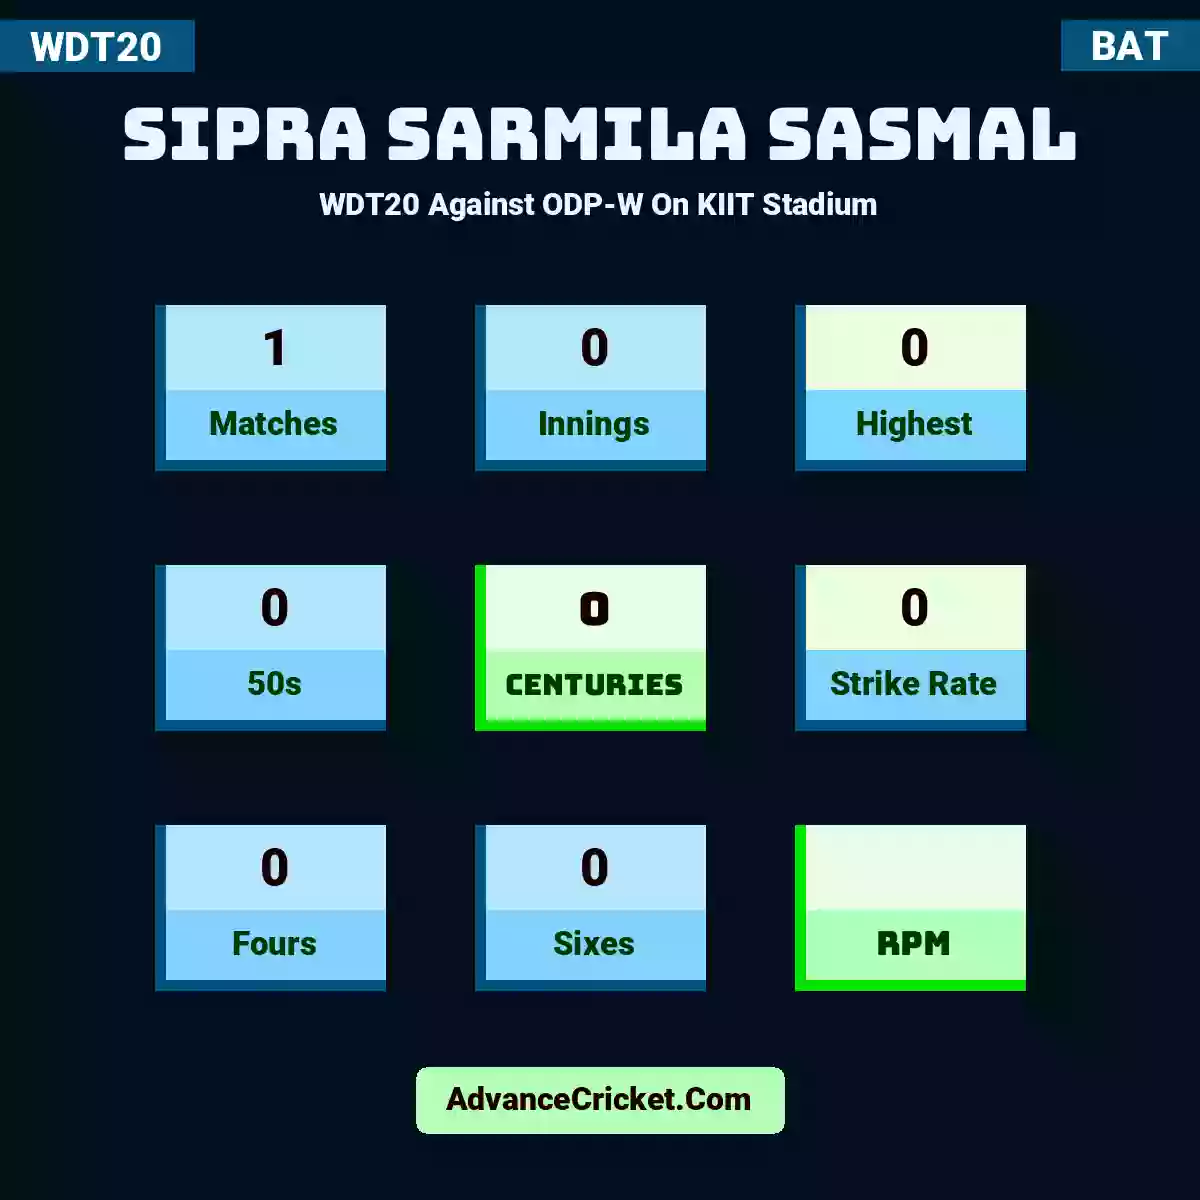 Sipra Sarmila Sasmal WDT20  Against ODP-W On KIIT Stadium, Sipra Sarmila Sasmal played 1 matches, scored 0 runs as highest, 0 half-centuries, and 0 centuries, with a strike rate of 0. S.Sarmila Sasmal hit 0 fours and 0 sixes.